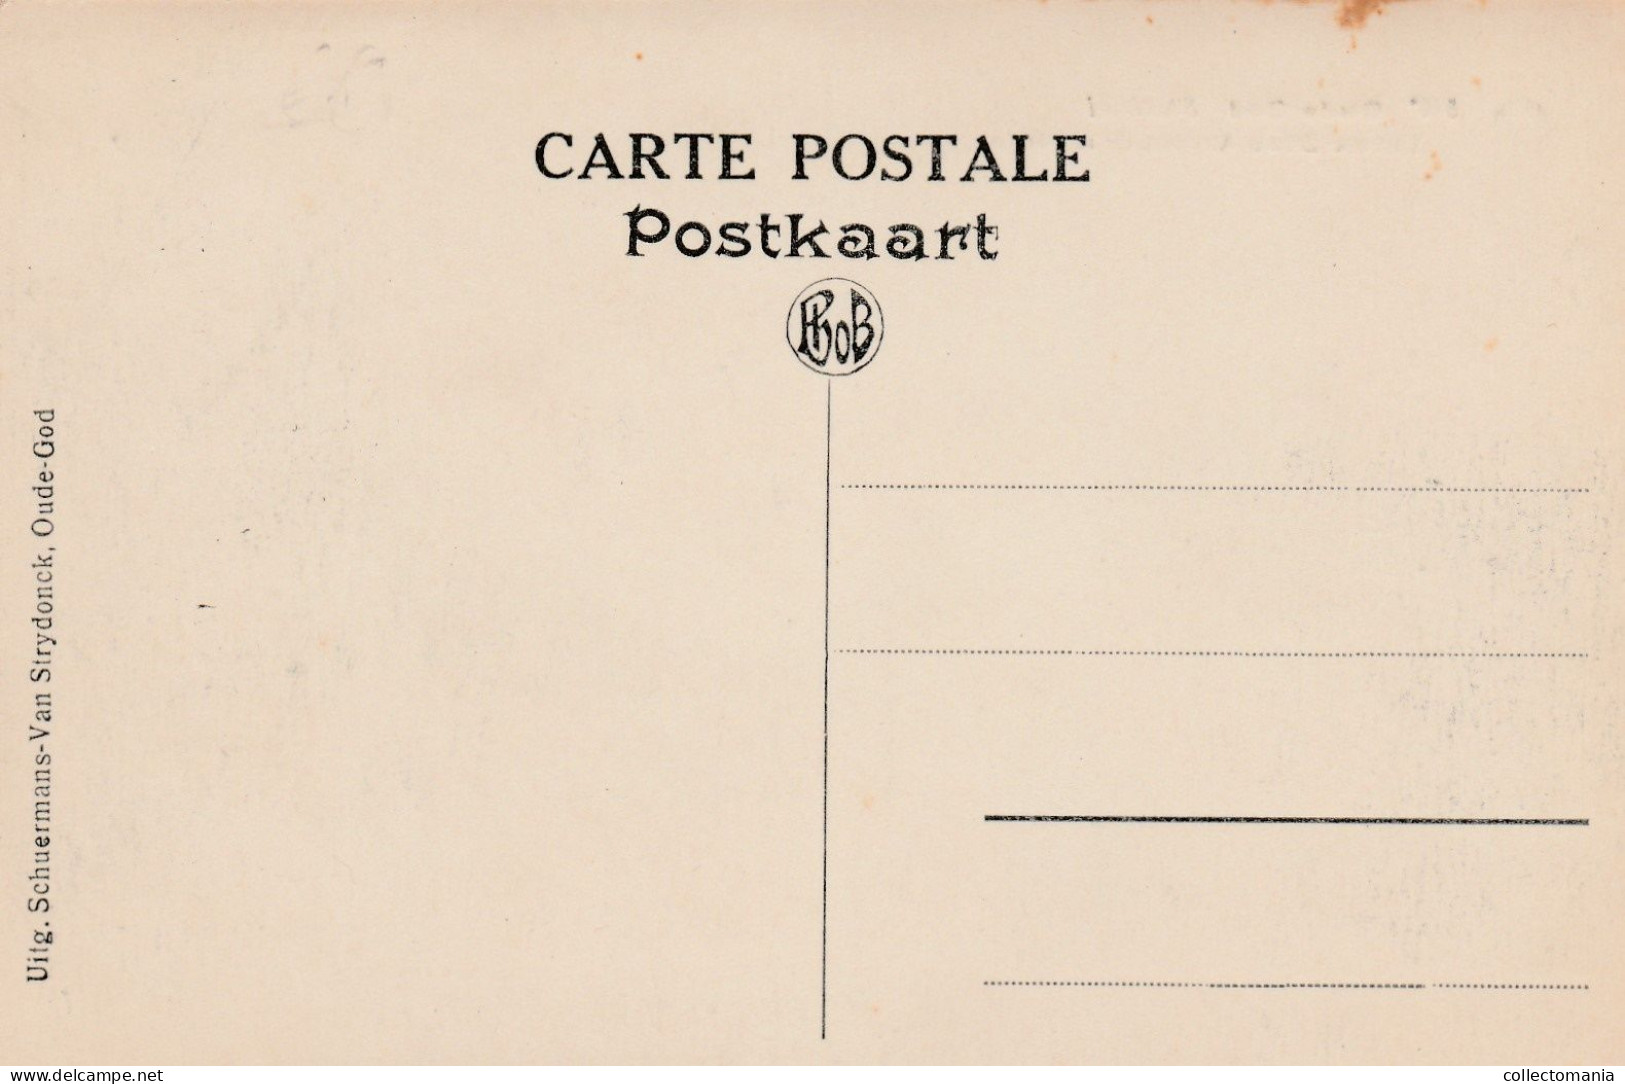 3 Oude Postkaarten  Mortsel Oude God  Statielei  Café Restaurant In Den Boer 1913 Café Minerva - Mortsel